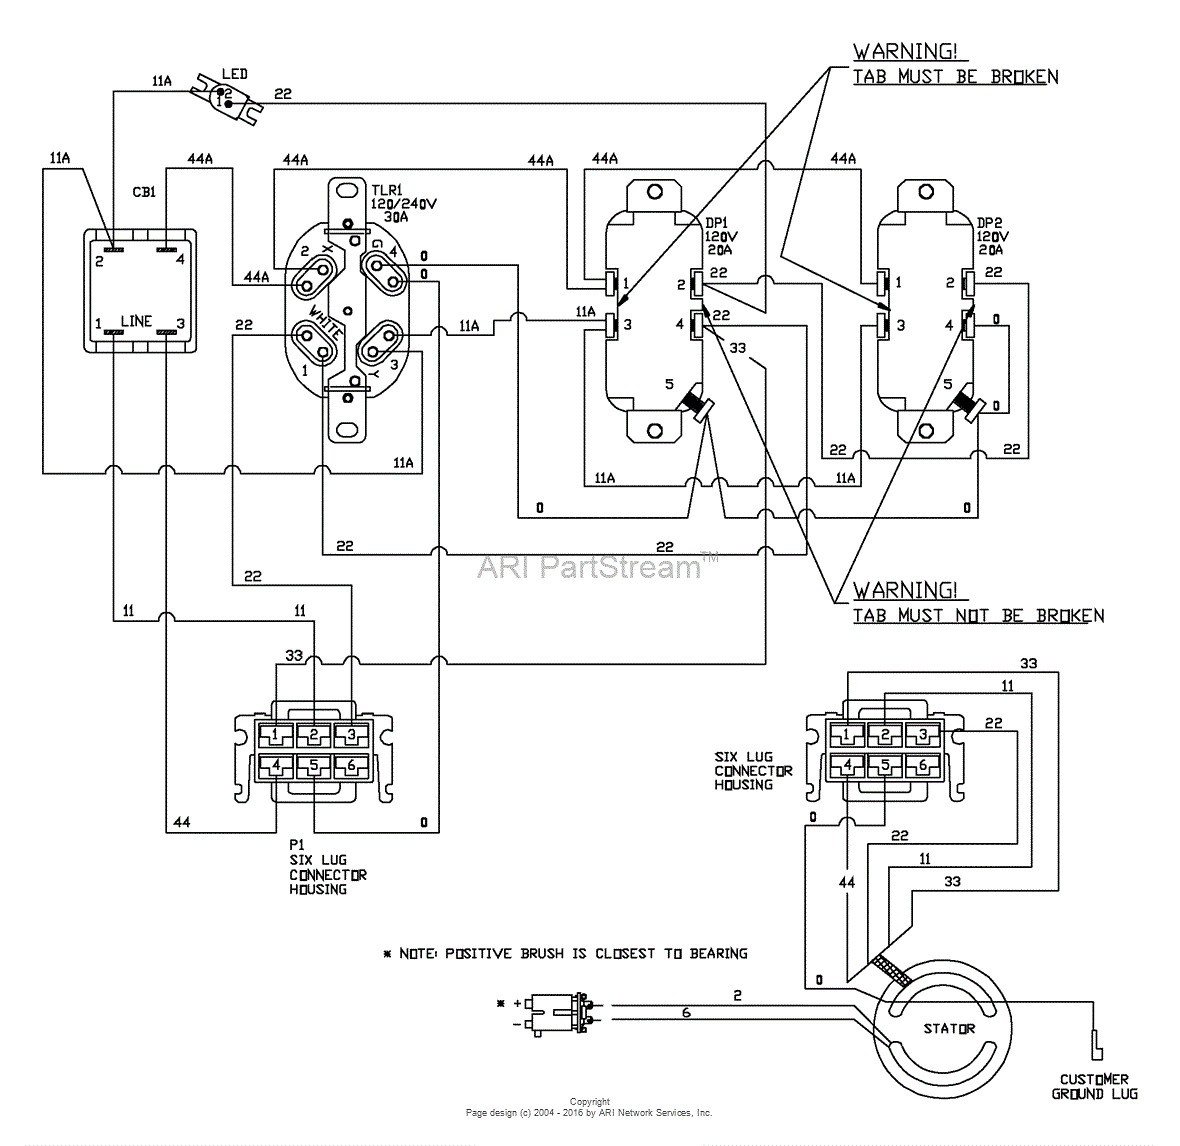 Diagram Briggs Stratton Switch Wiring Diagram Full Version Hd Quality Wiring Diagram Playdiagrams Belen Rodriguez It